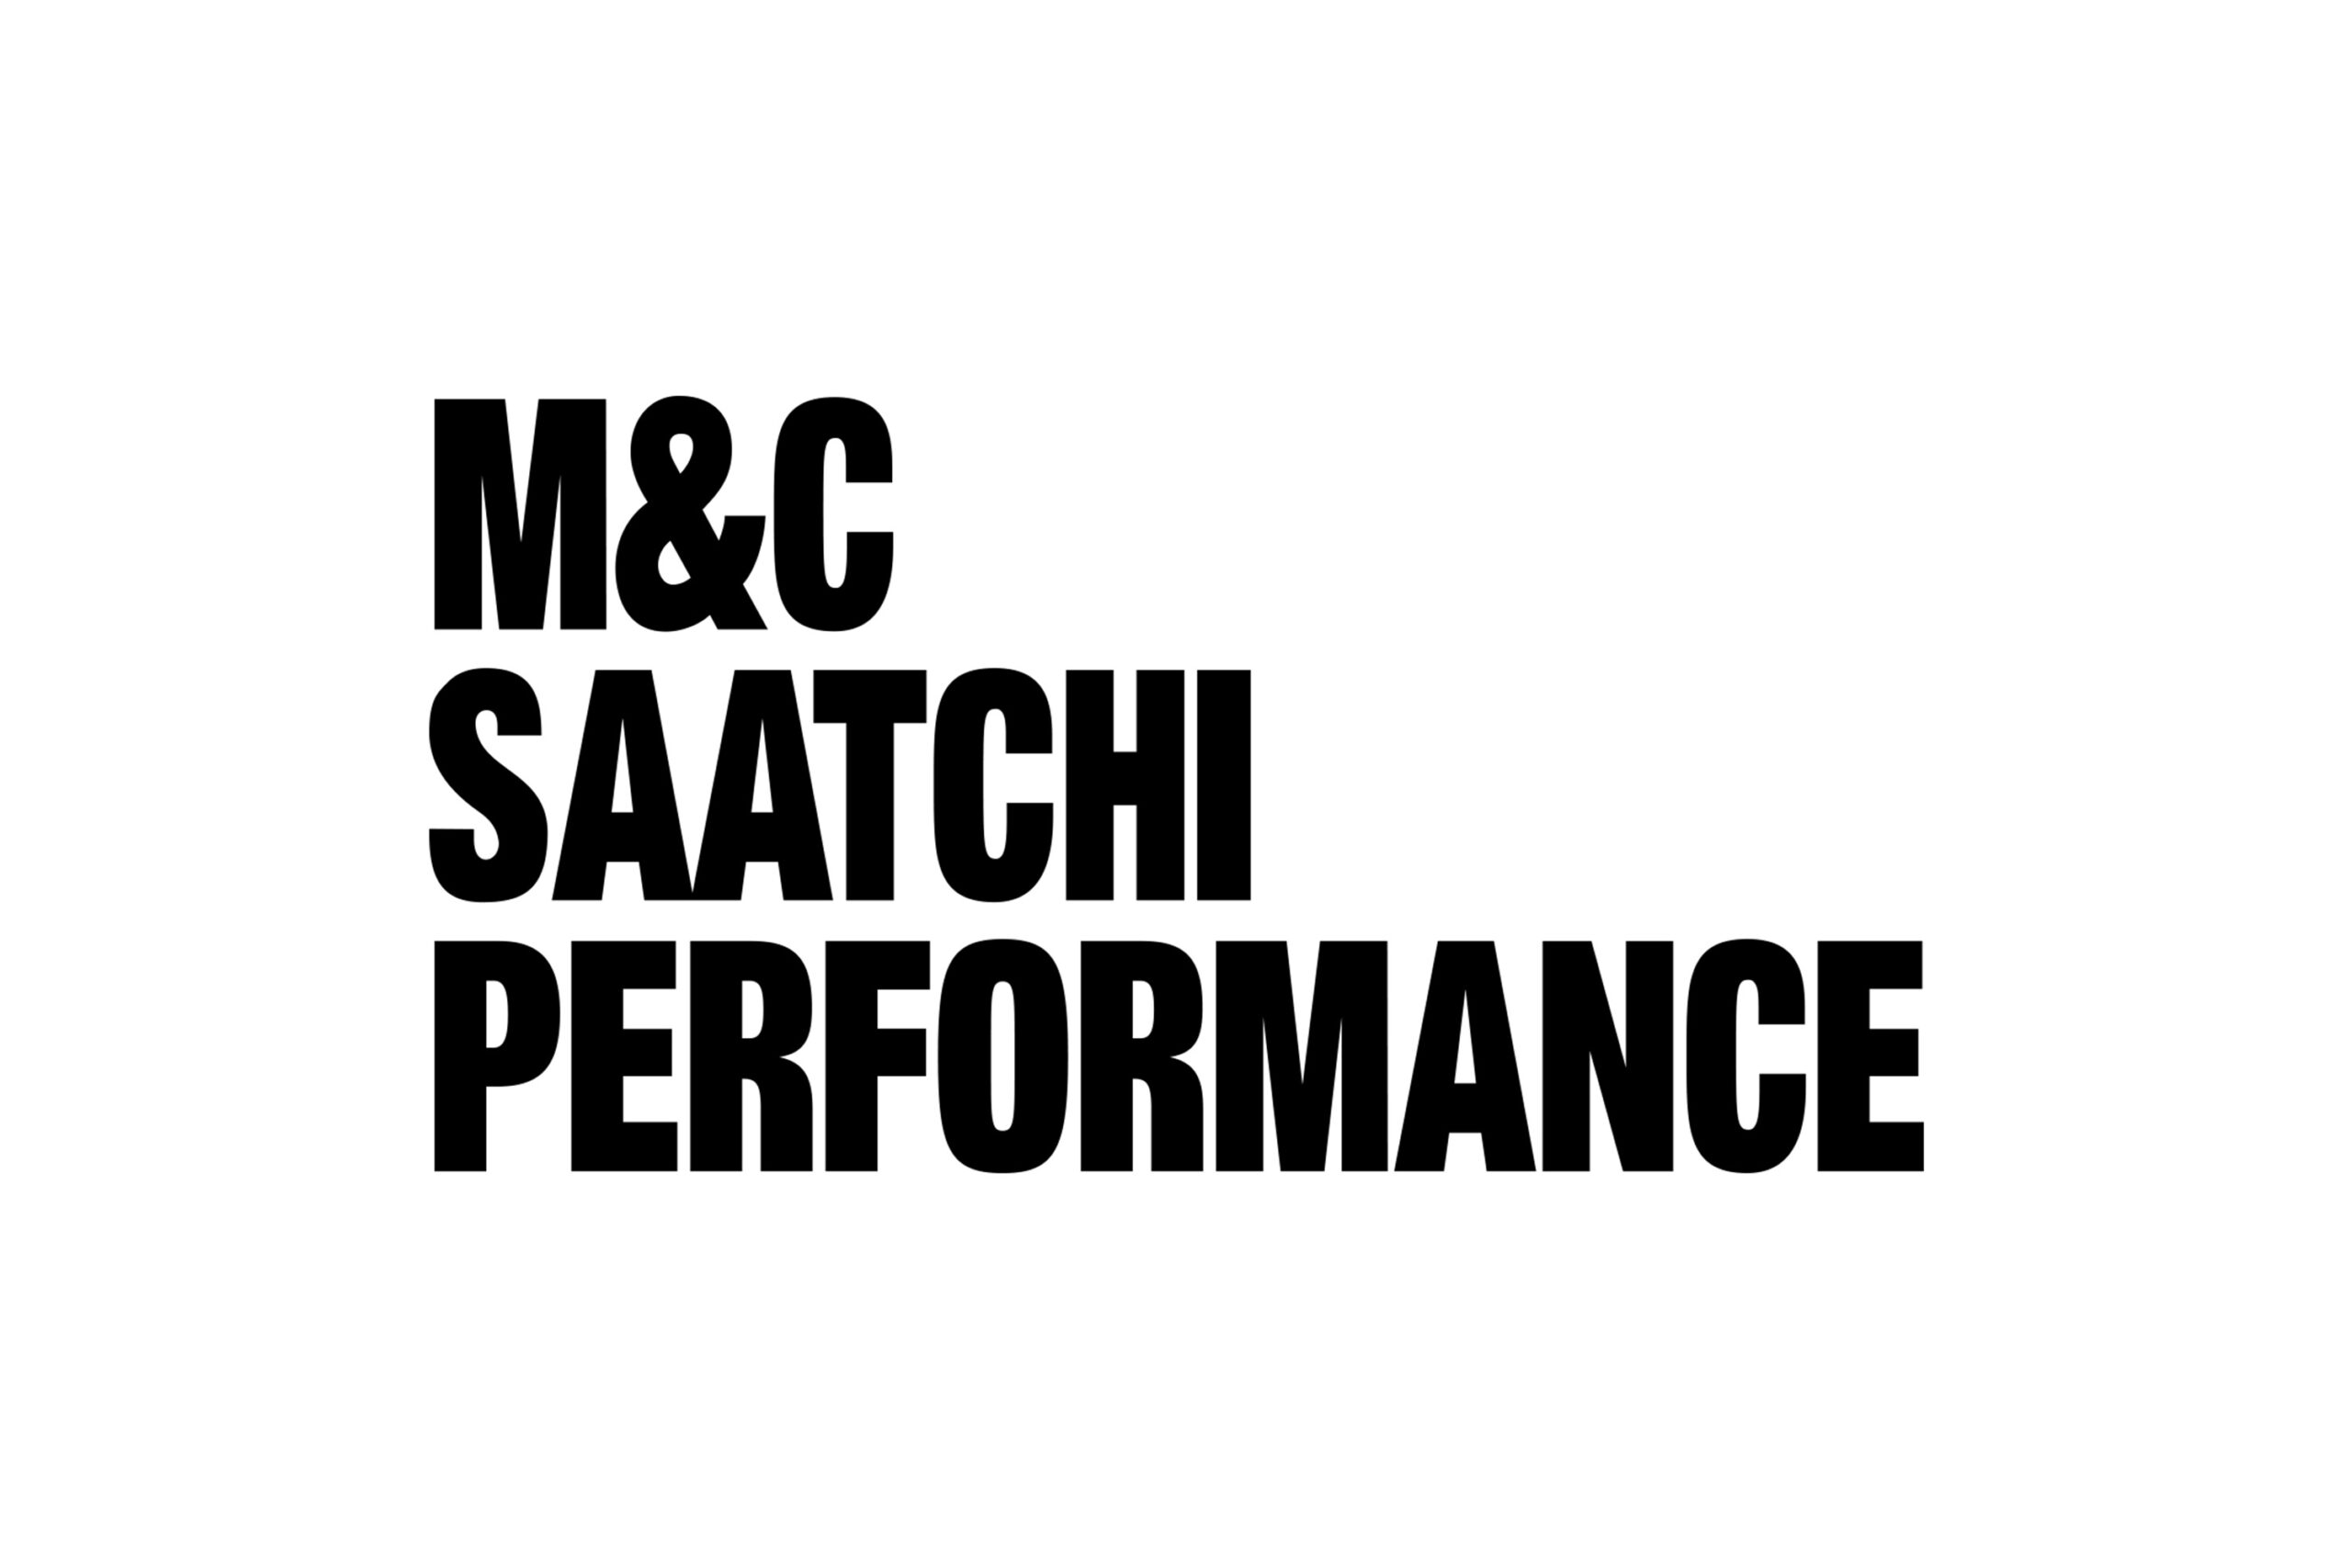 M&C Saatchi Performance action planning intro logo